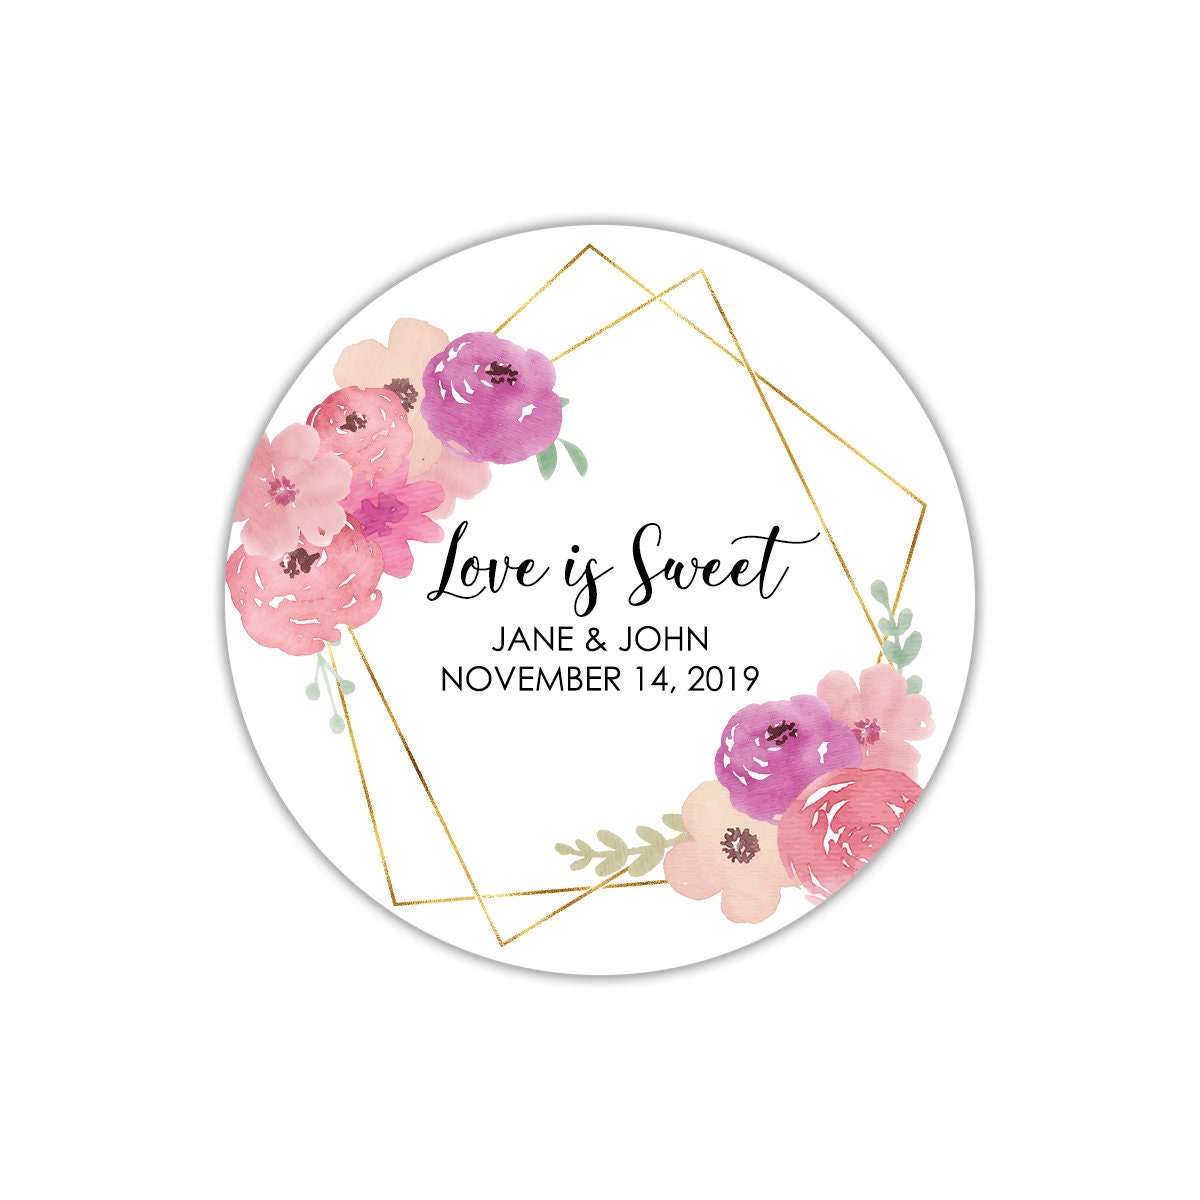 Honey wedding favor labels F16:19 Love is sweet labels Love is sweet stickers Party Favor Stickers 